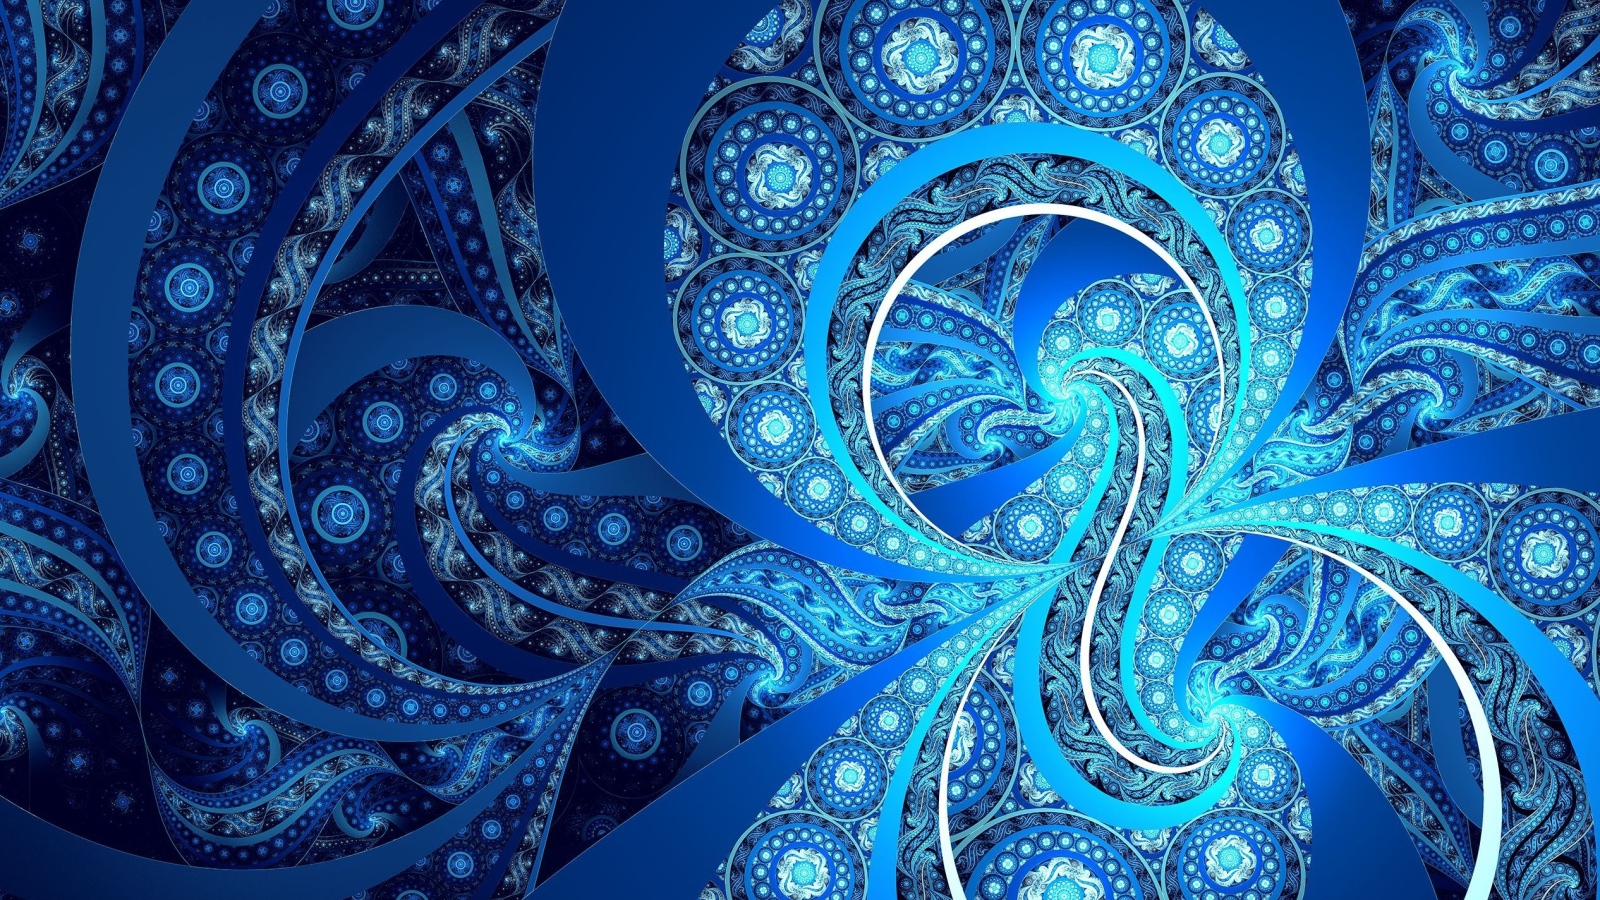 Unusual blue fractal patterns